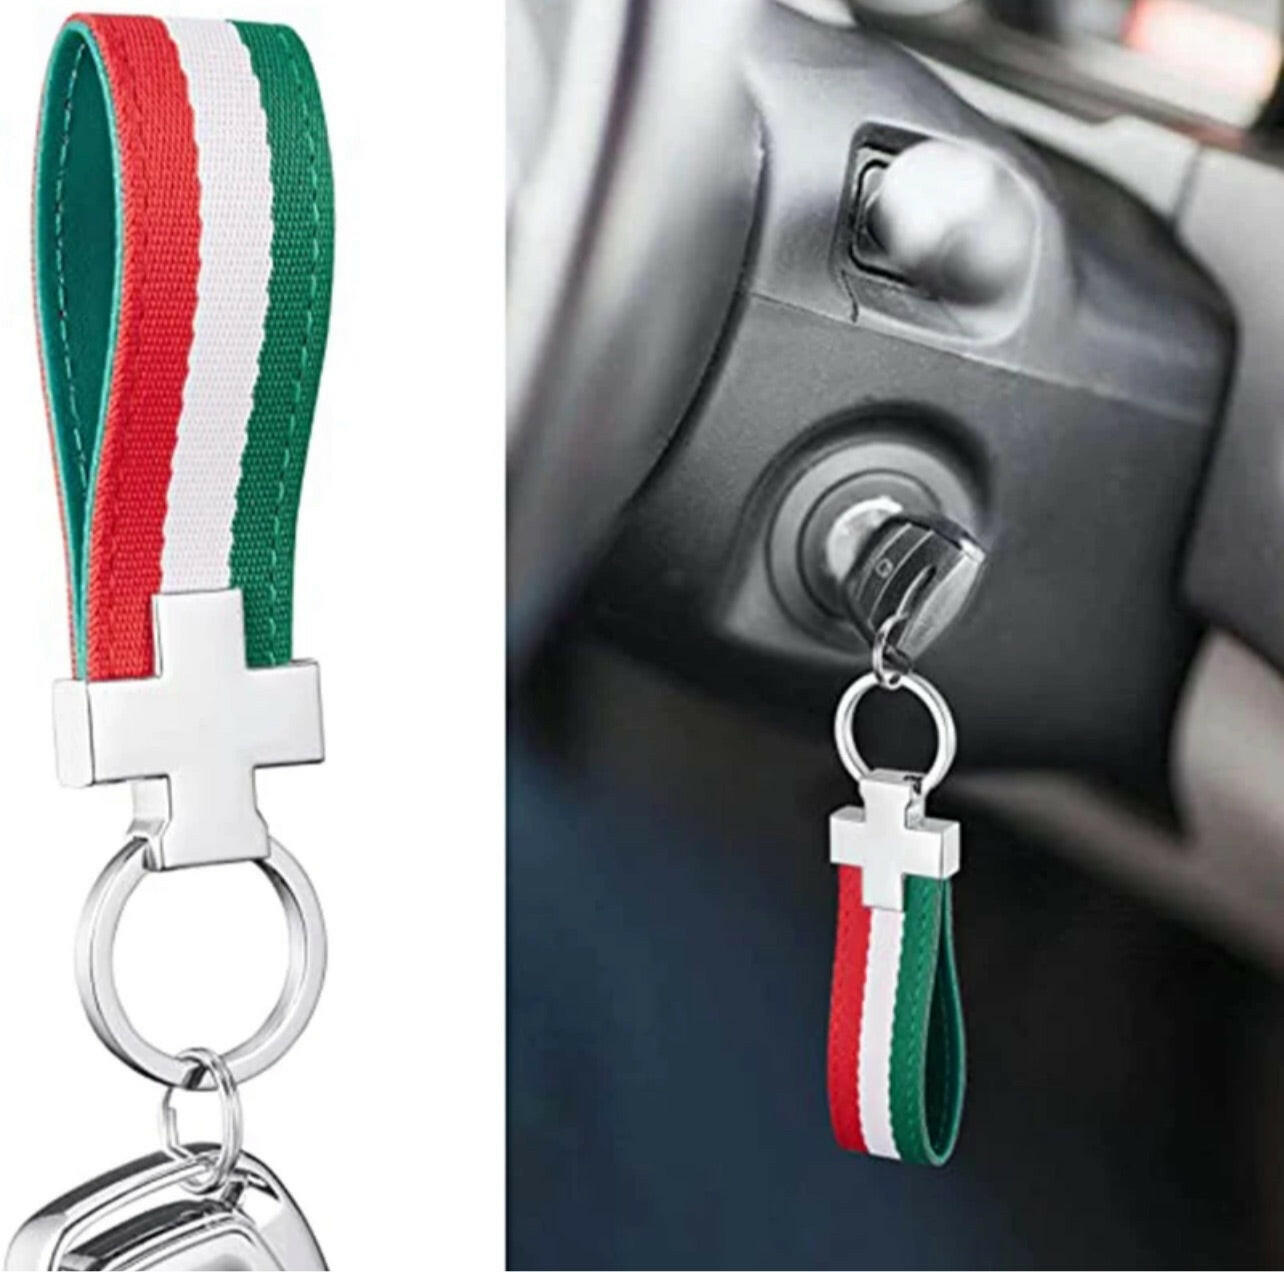 Italian Keychain - Italy Flag Keychain.